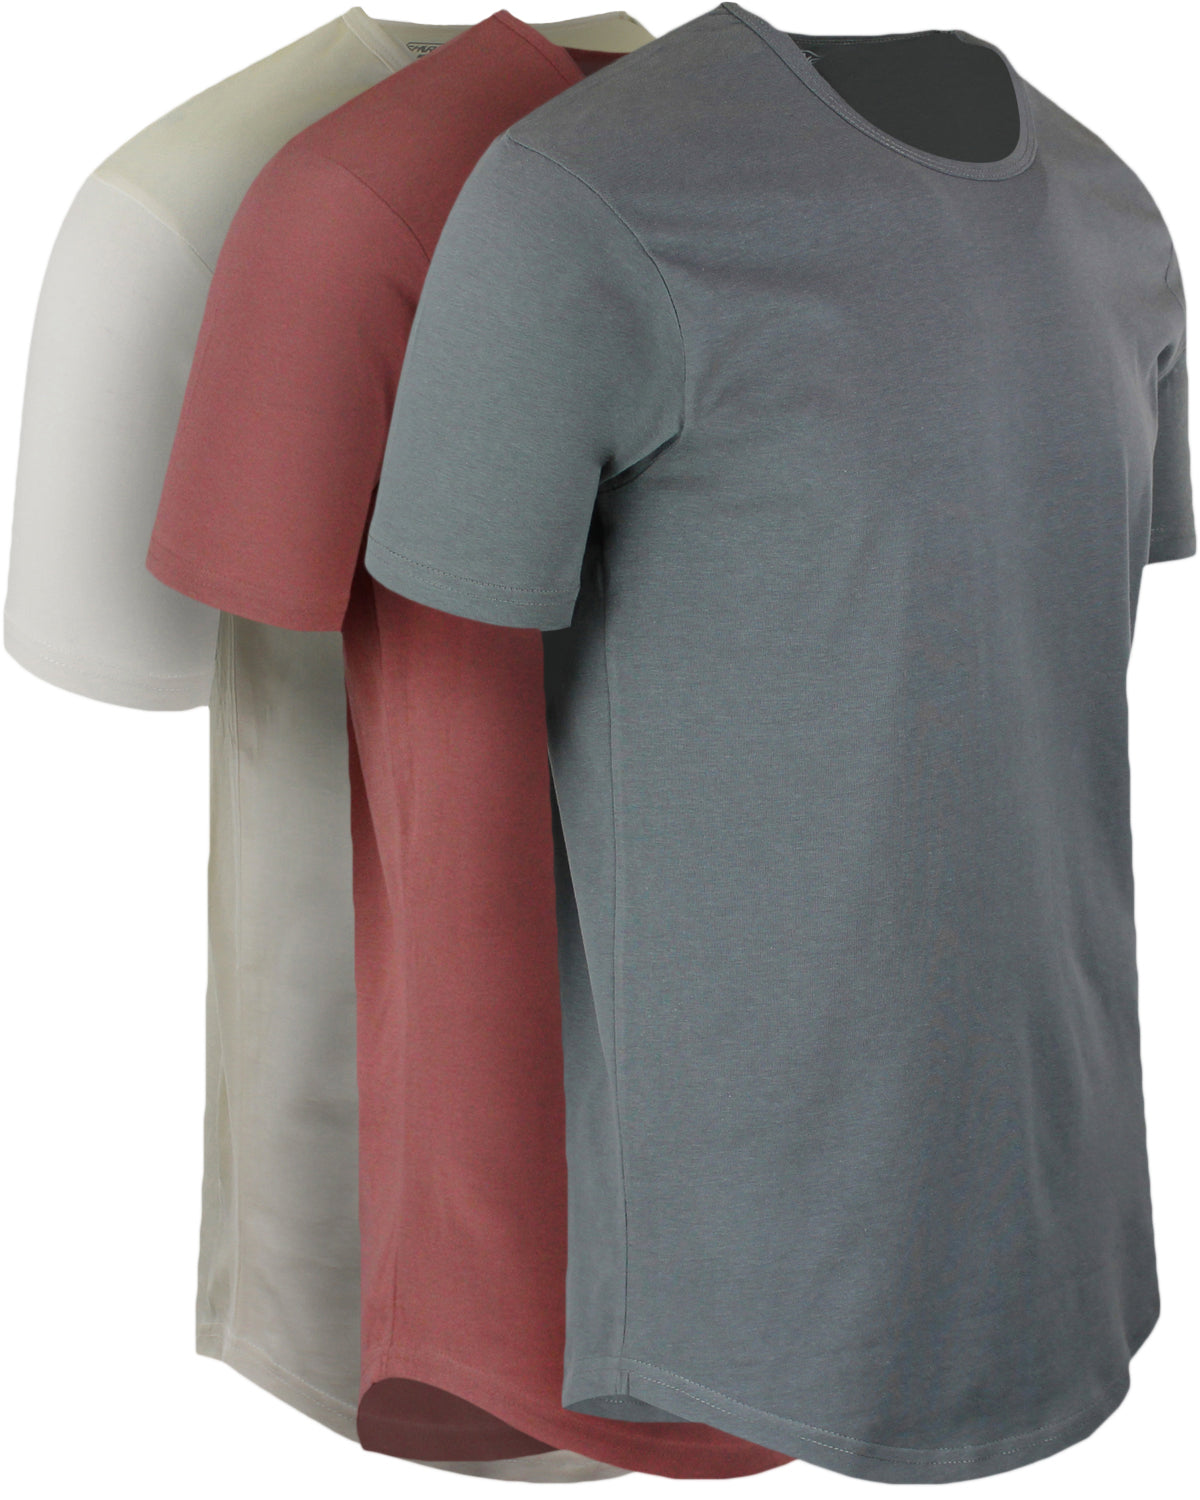 Drop Cut Shirts - Multi Color 3 Packs